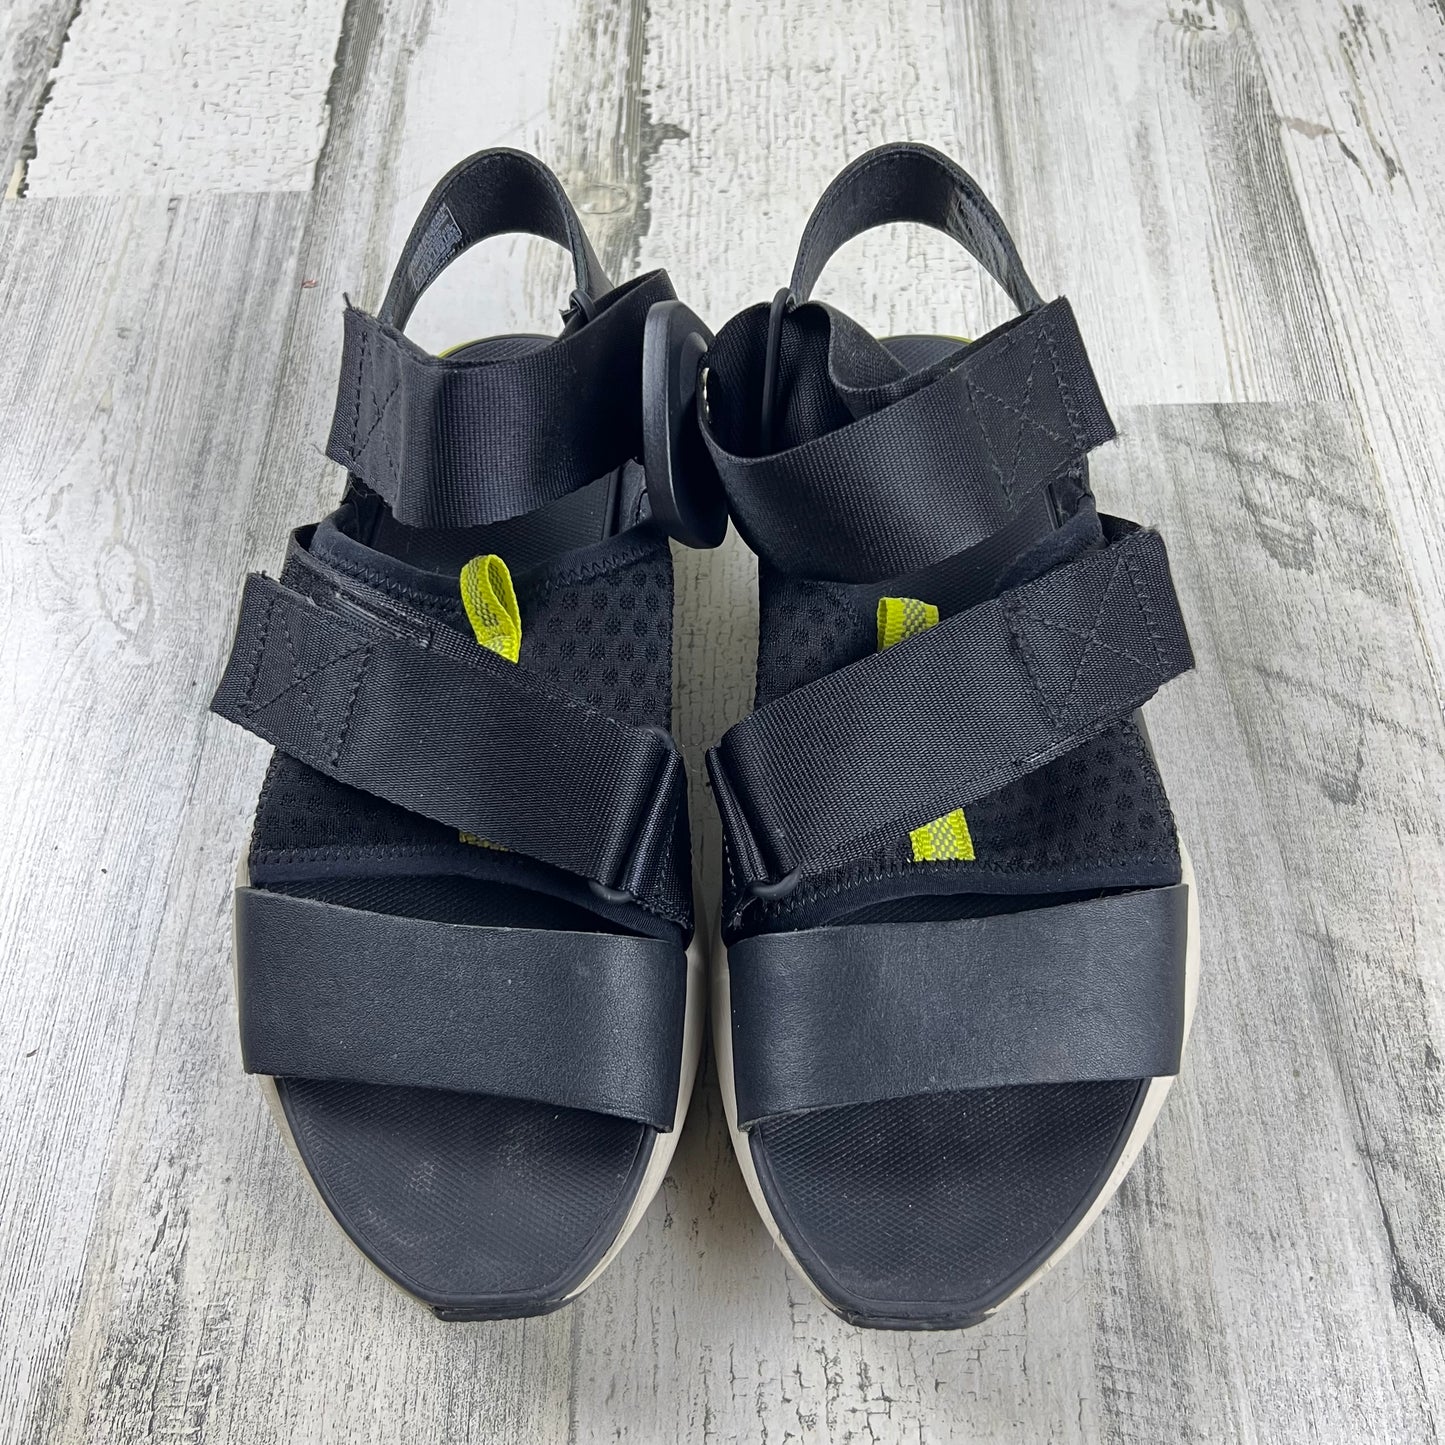 Sandals Sport By Sorel  Size: 6.5